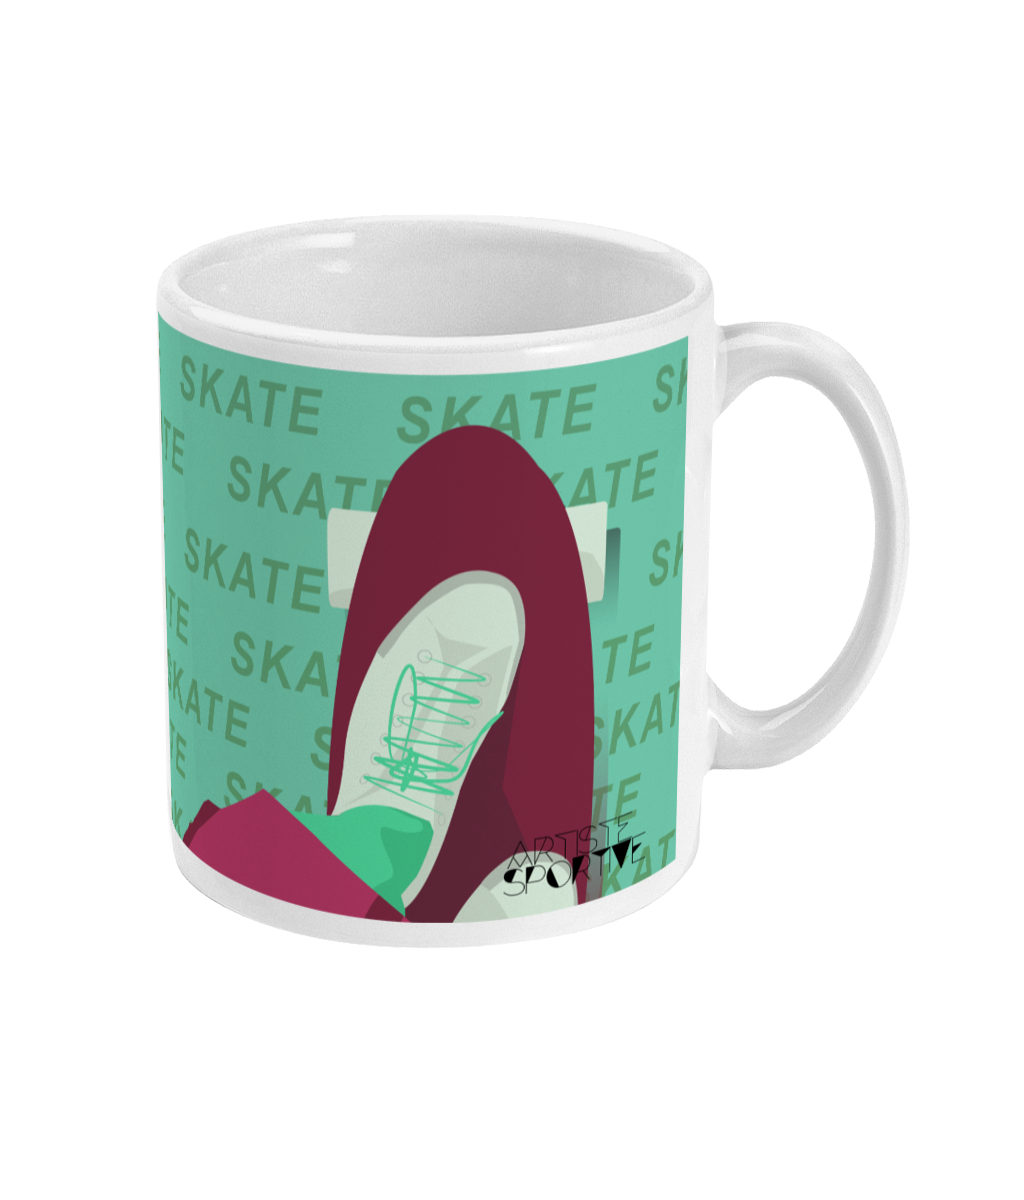 Tasse ou mug "skate en vert bordeaux" - Personnalisable